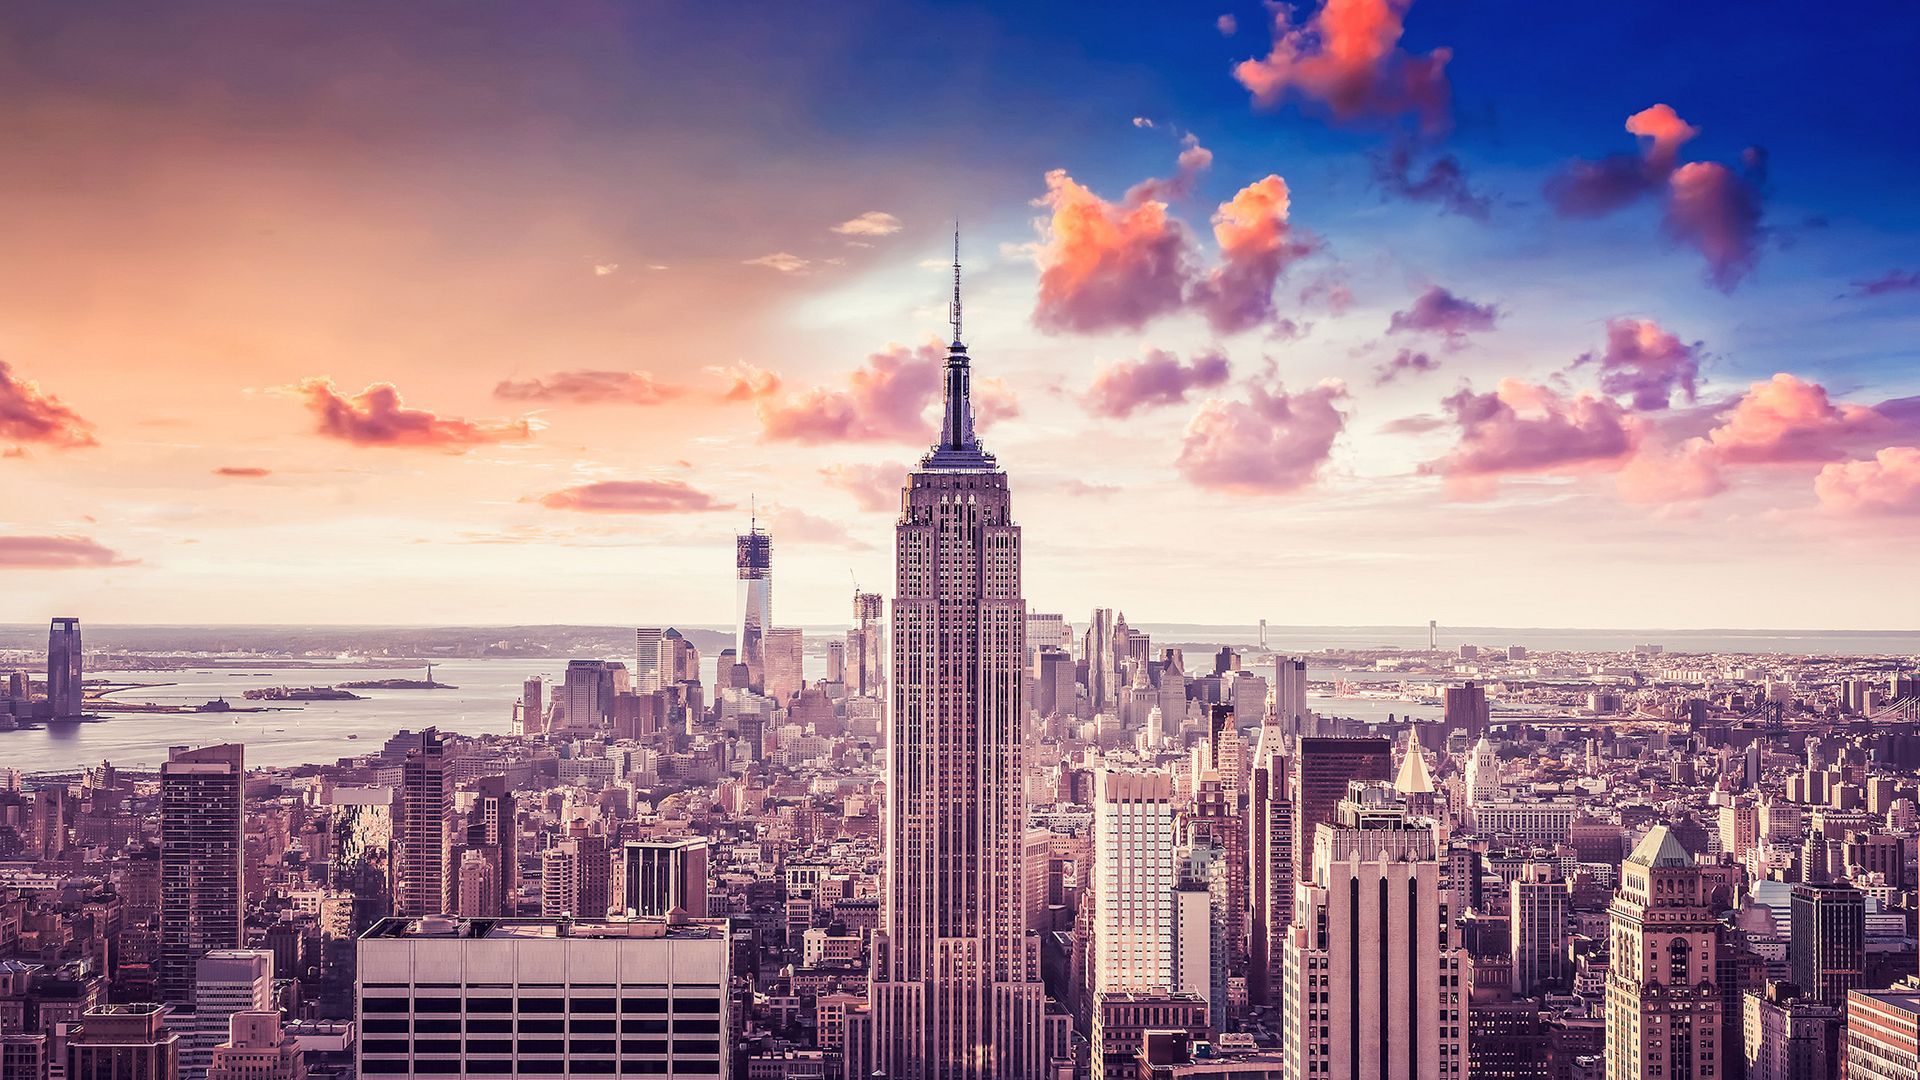 fondos de pantalla tumblr de nueva york,ciudad,paisaje urbano,área metropolitana,cielo,horizonte